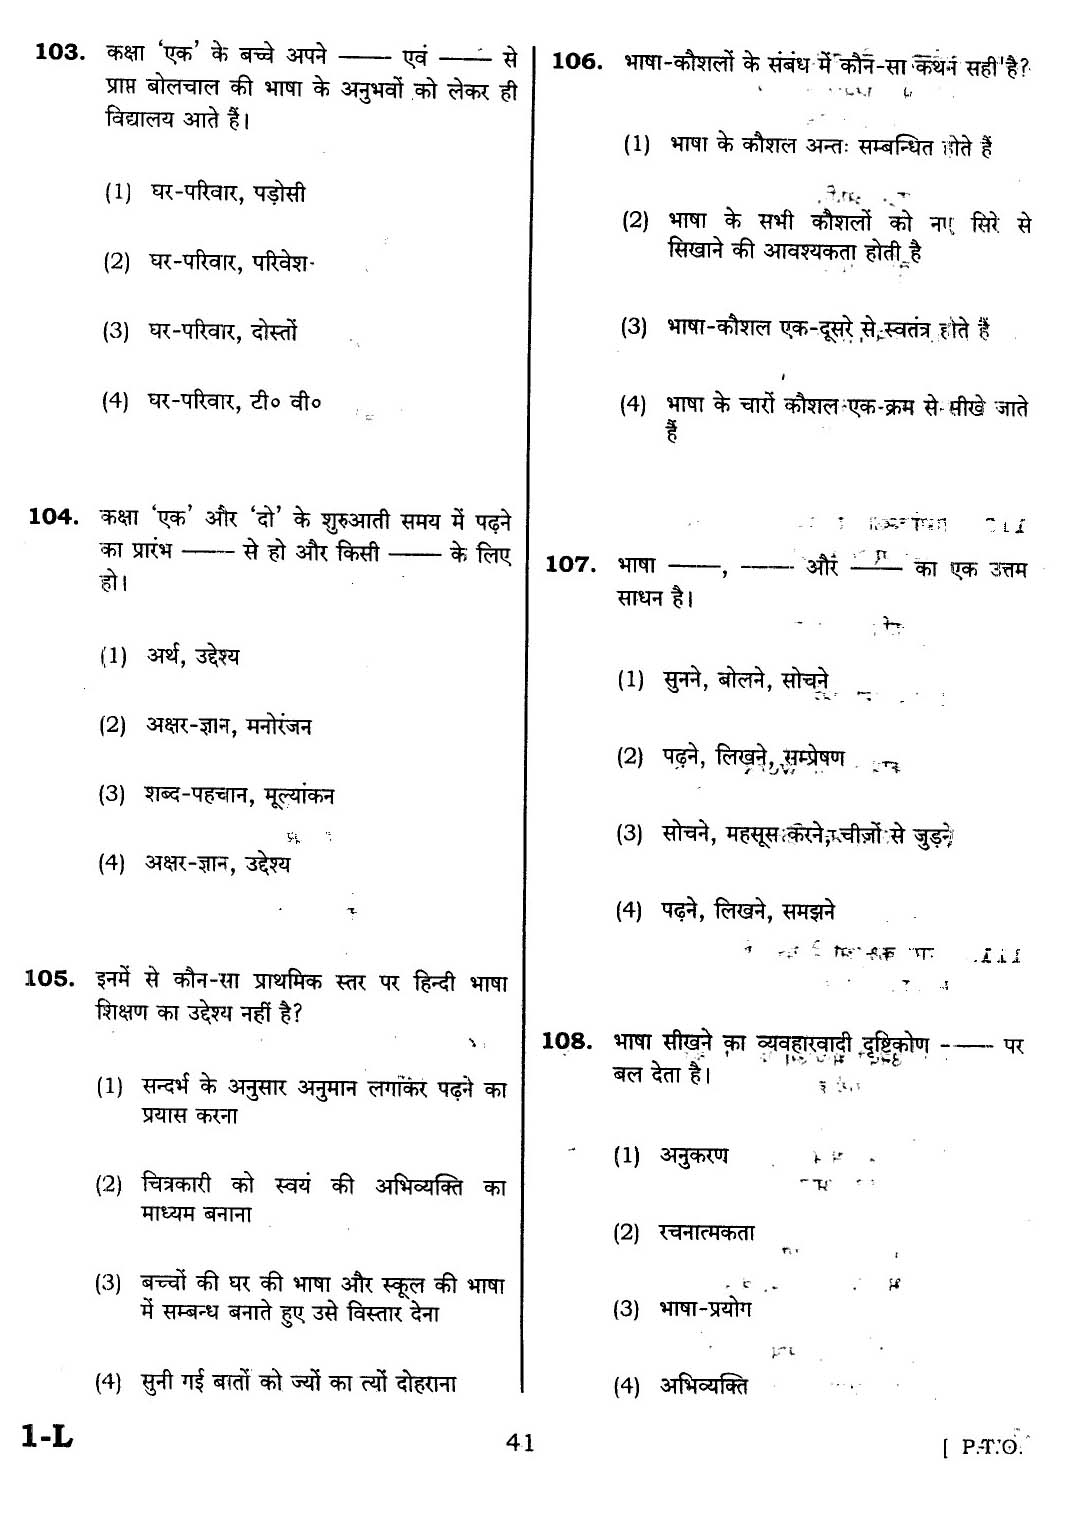 CTET February 2014 Paper 1 Part IV Language 1 Hindi 3